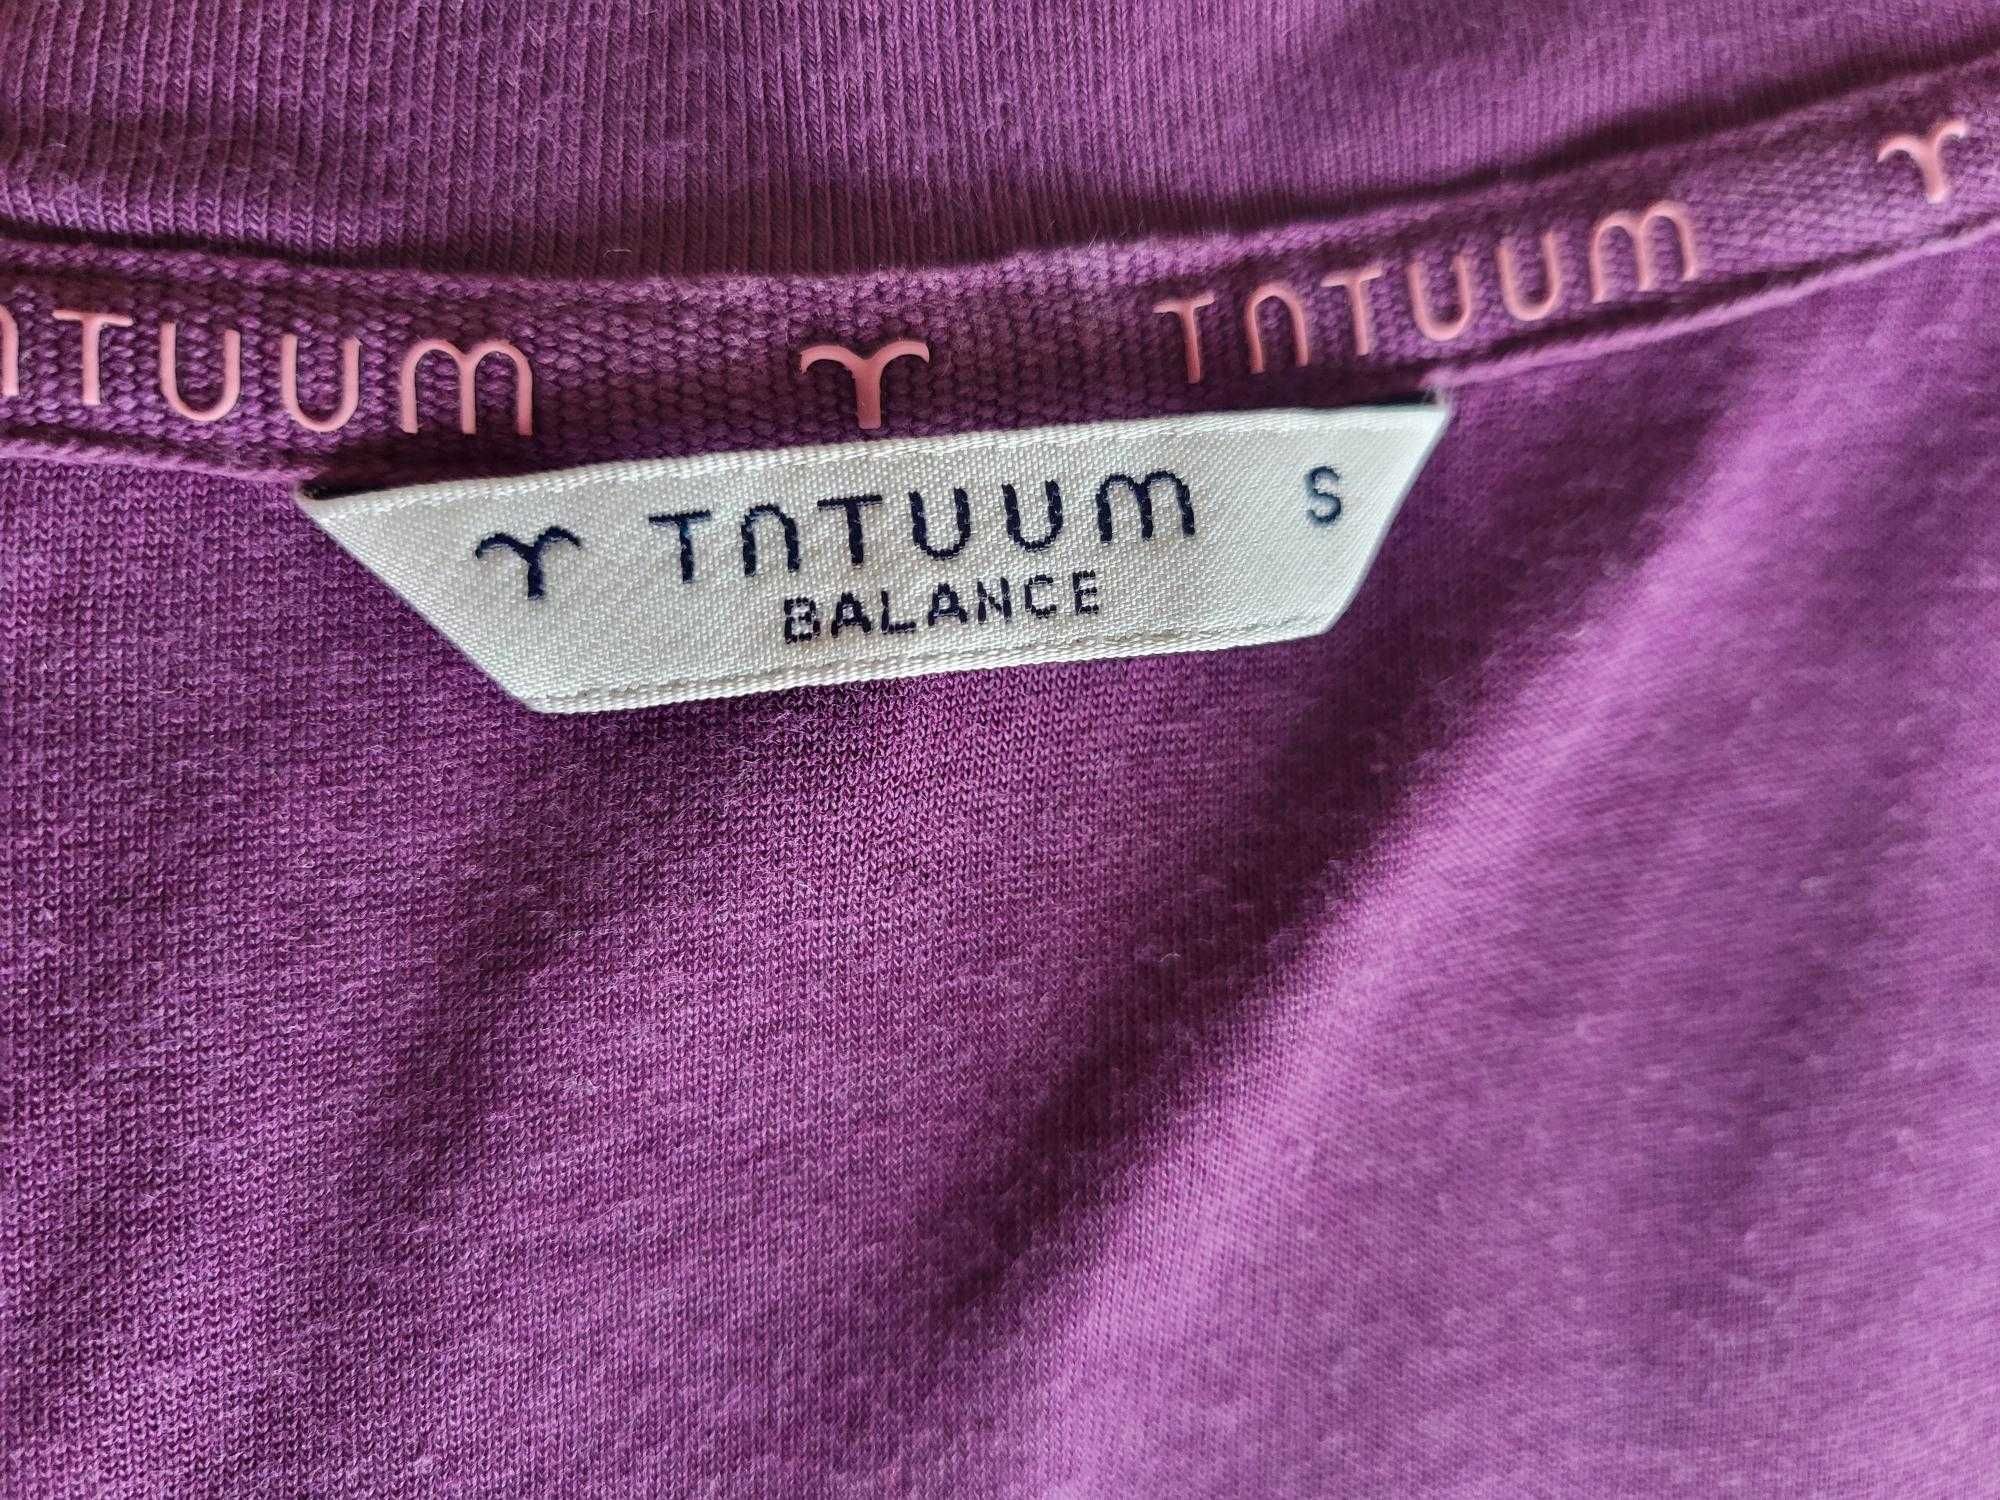 Bluza Tatuum rozmiar S (fioletowa)